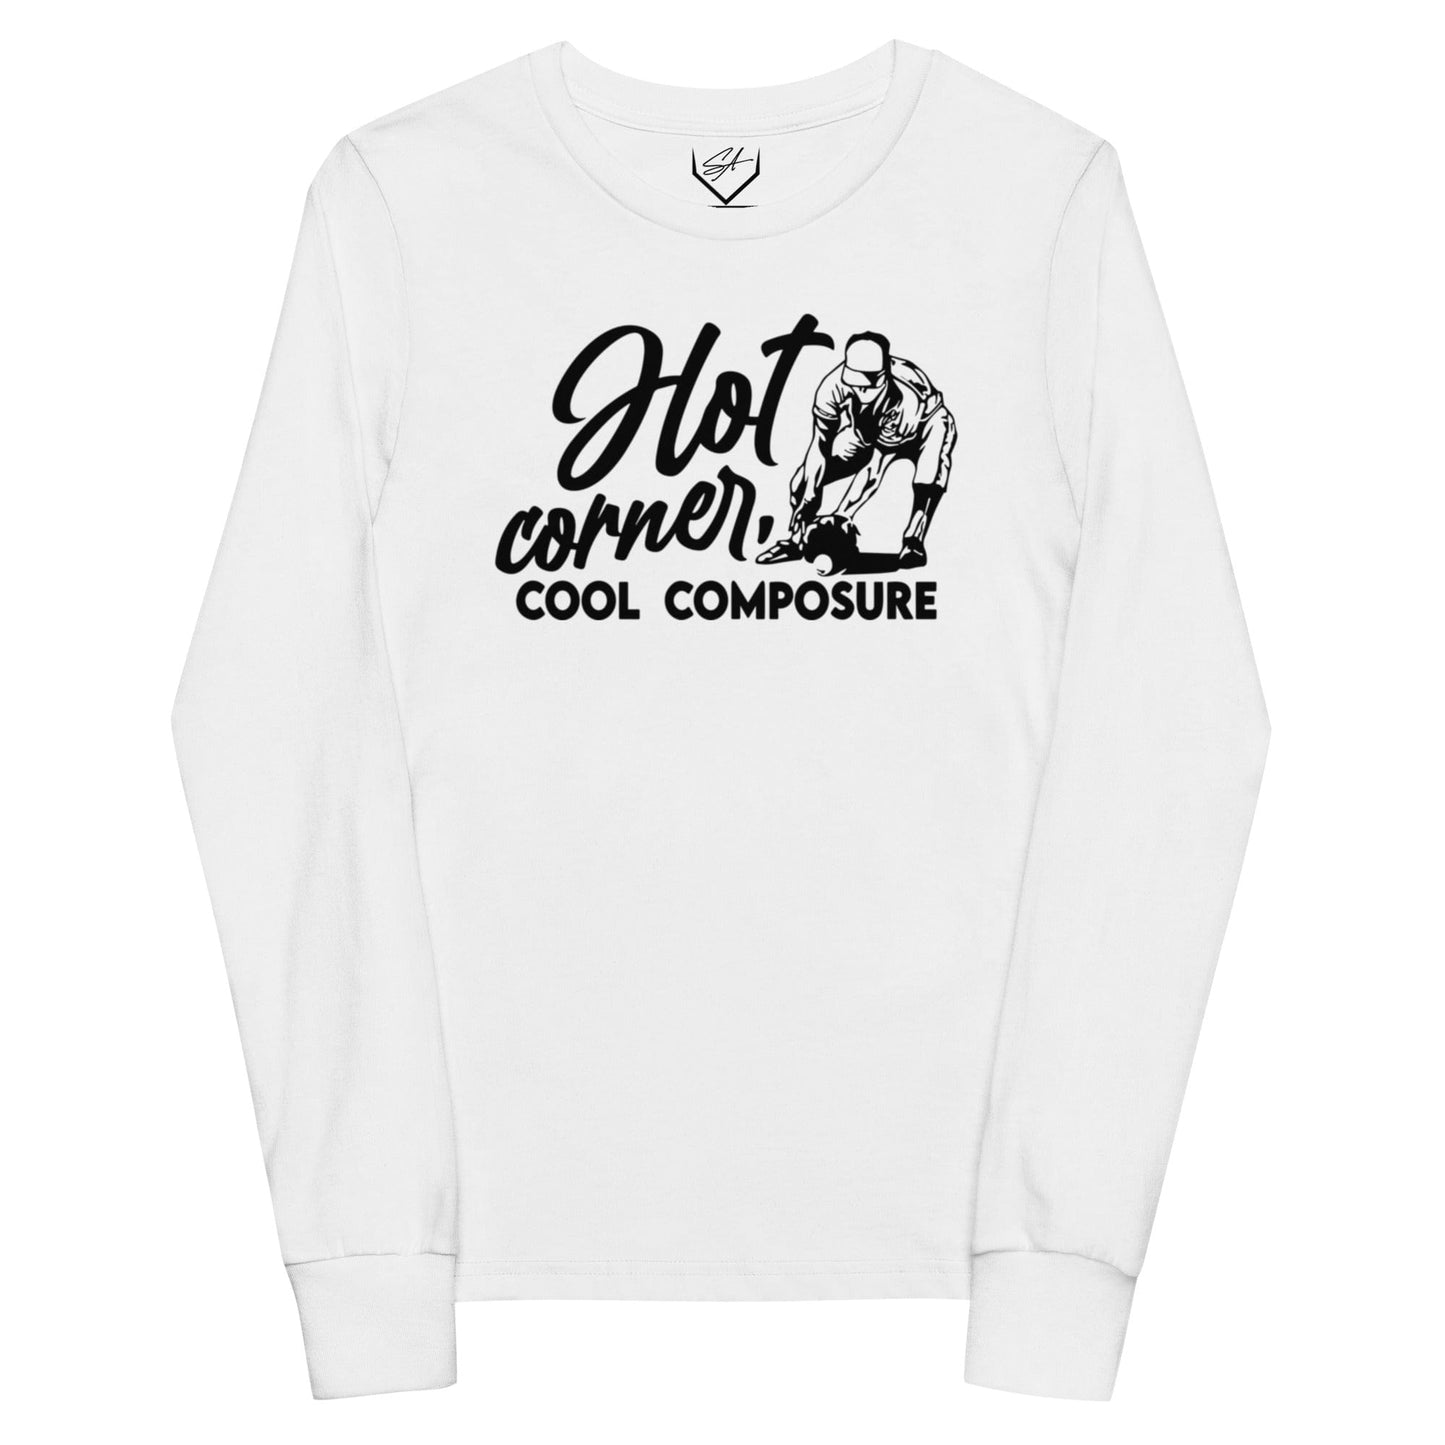 Hot Corner Cool Composure - Youth Long Sleeve